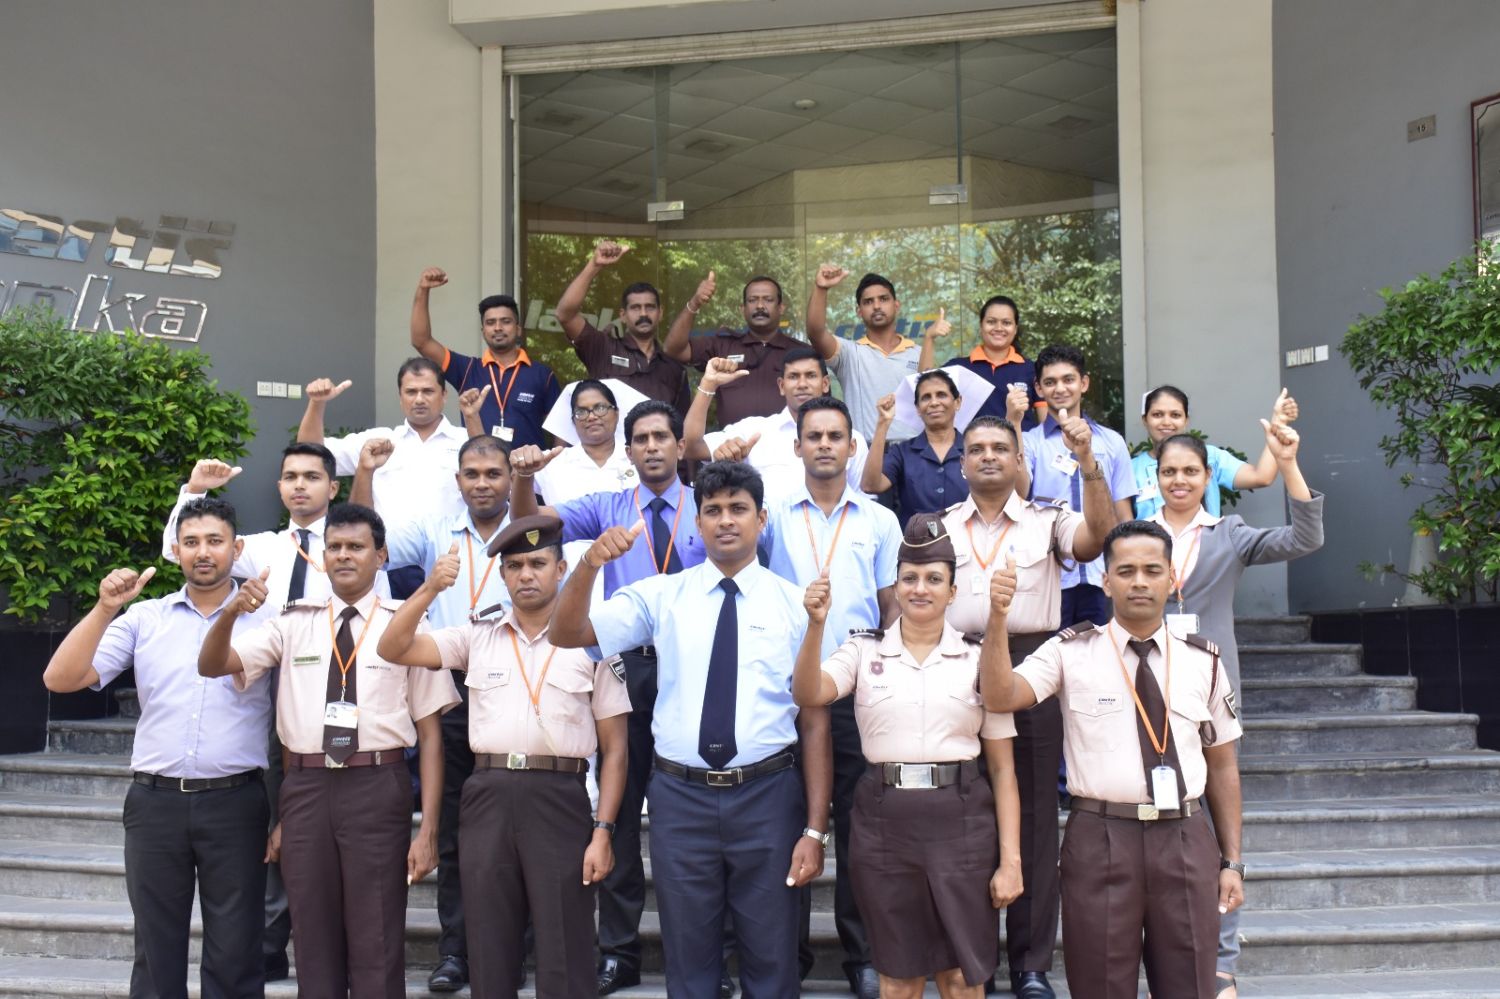 Certis Lanka Security Solutions (Pvt) Ltd